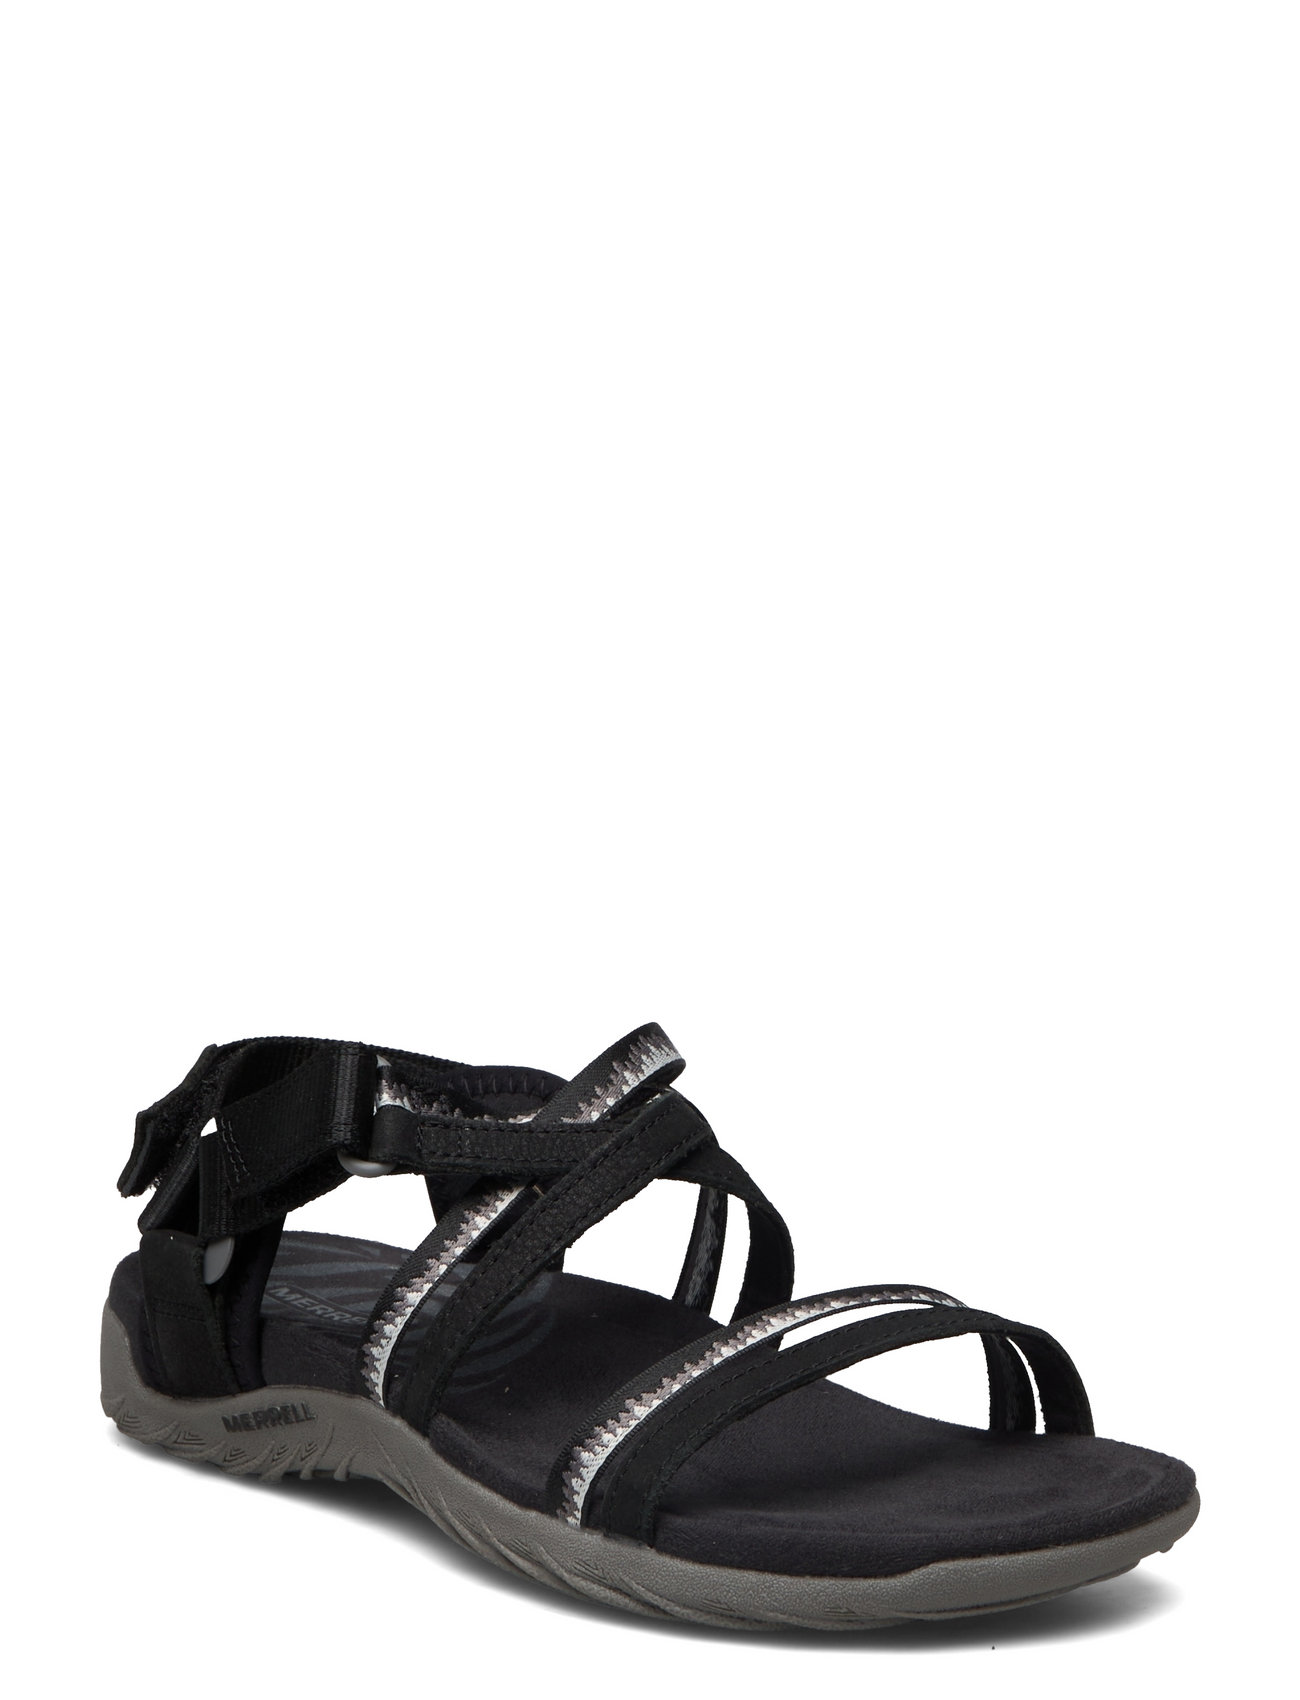 Women's Terran 3 Cush Lattice - Black Sport Summer Shoes Sandals Black Merrell